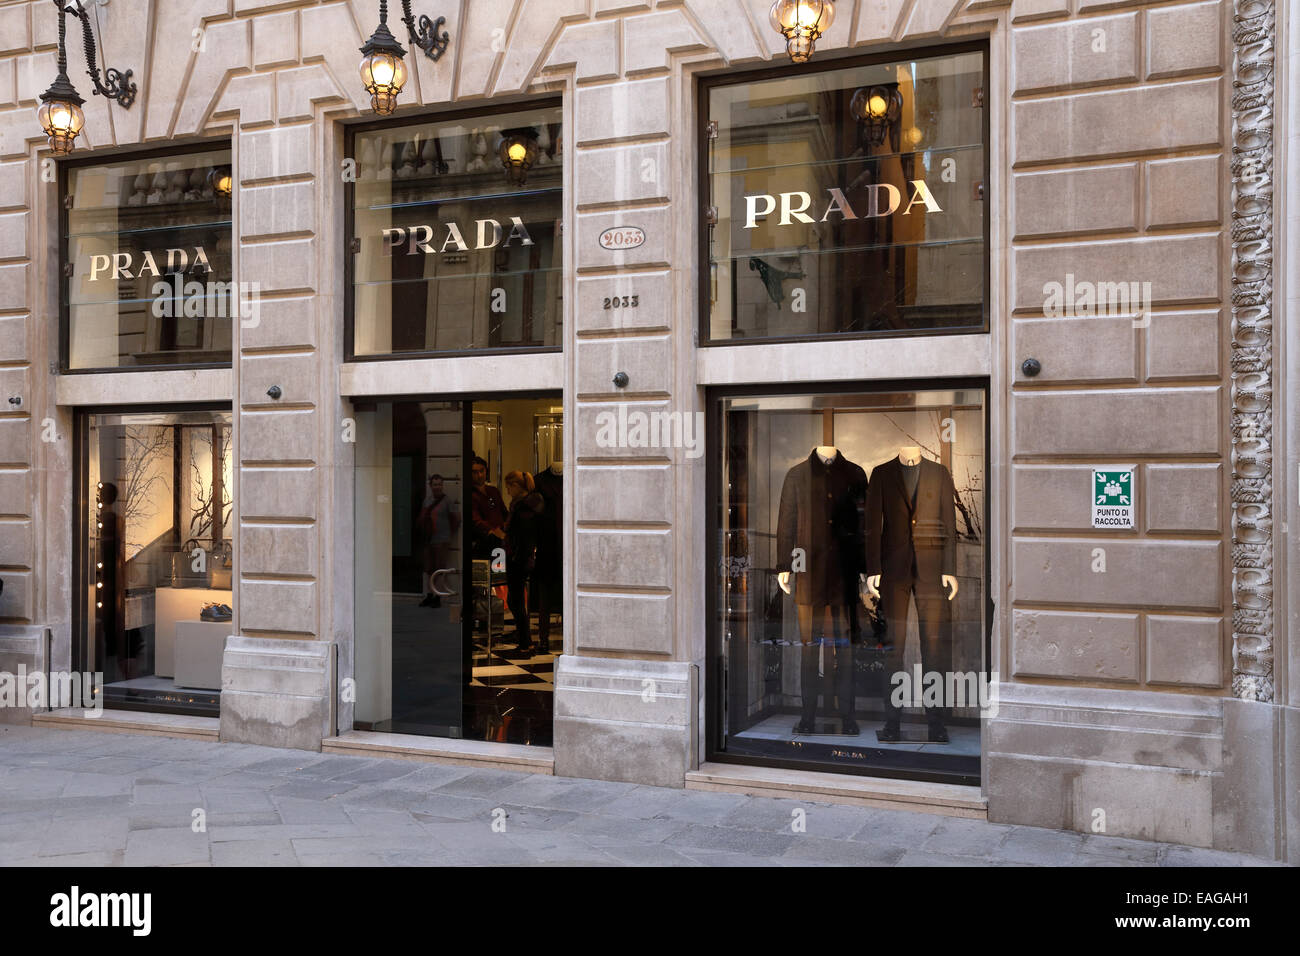 The Prada store in Venice, Italy Stock Photo - Alamy